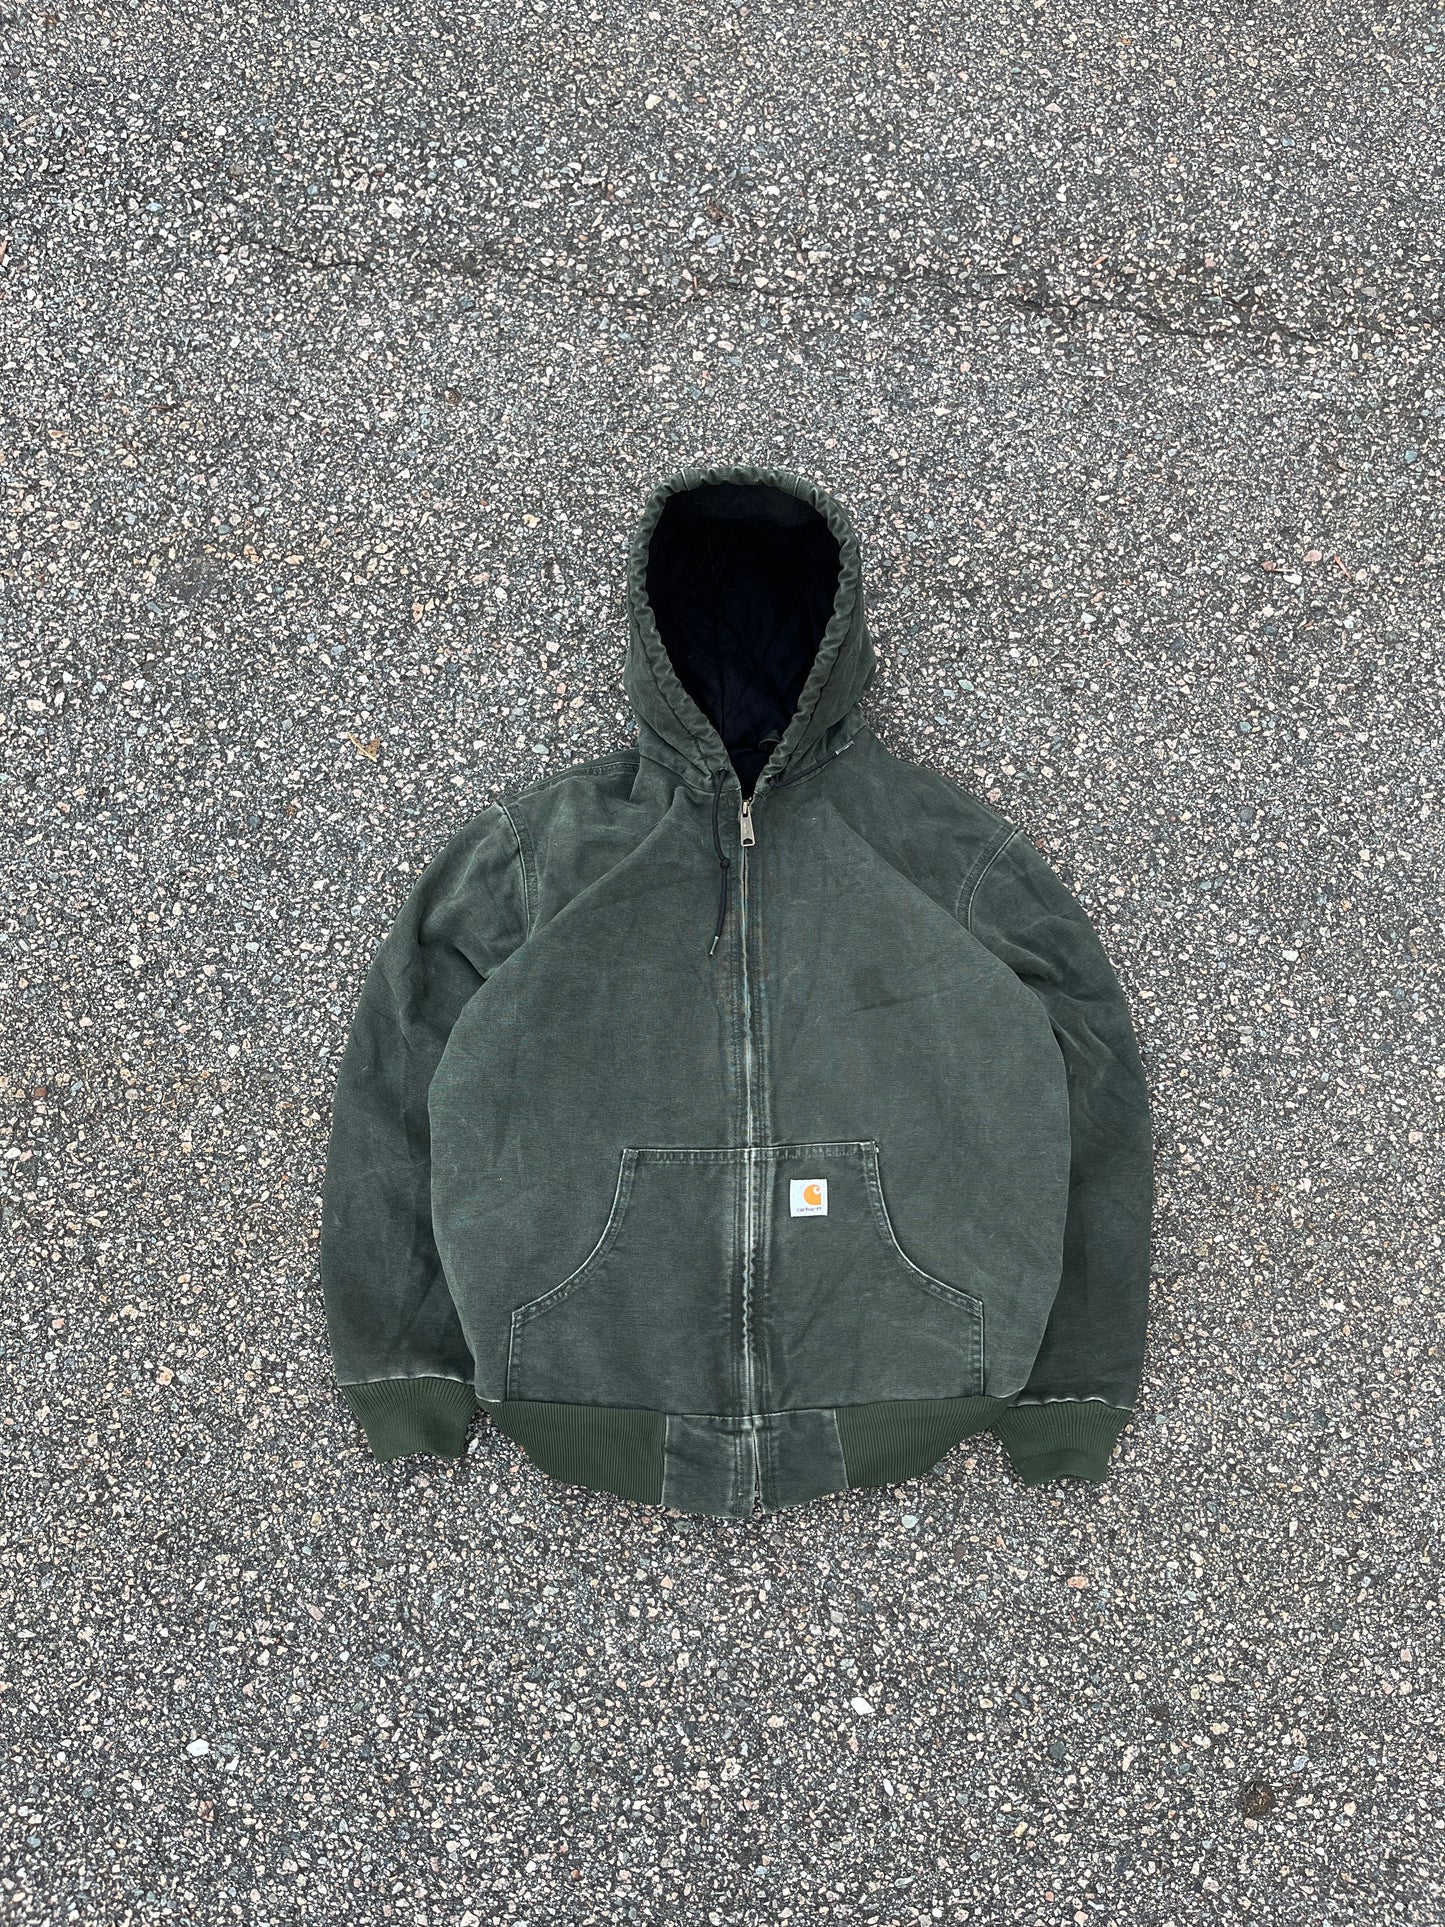 Faded Olive Green Carhartt Active Jacket - Medium